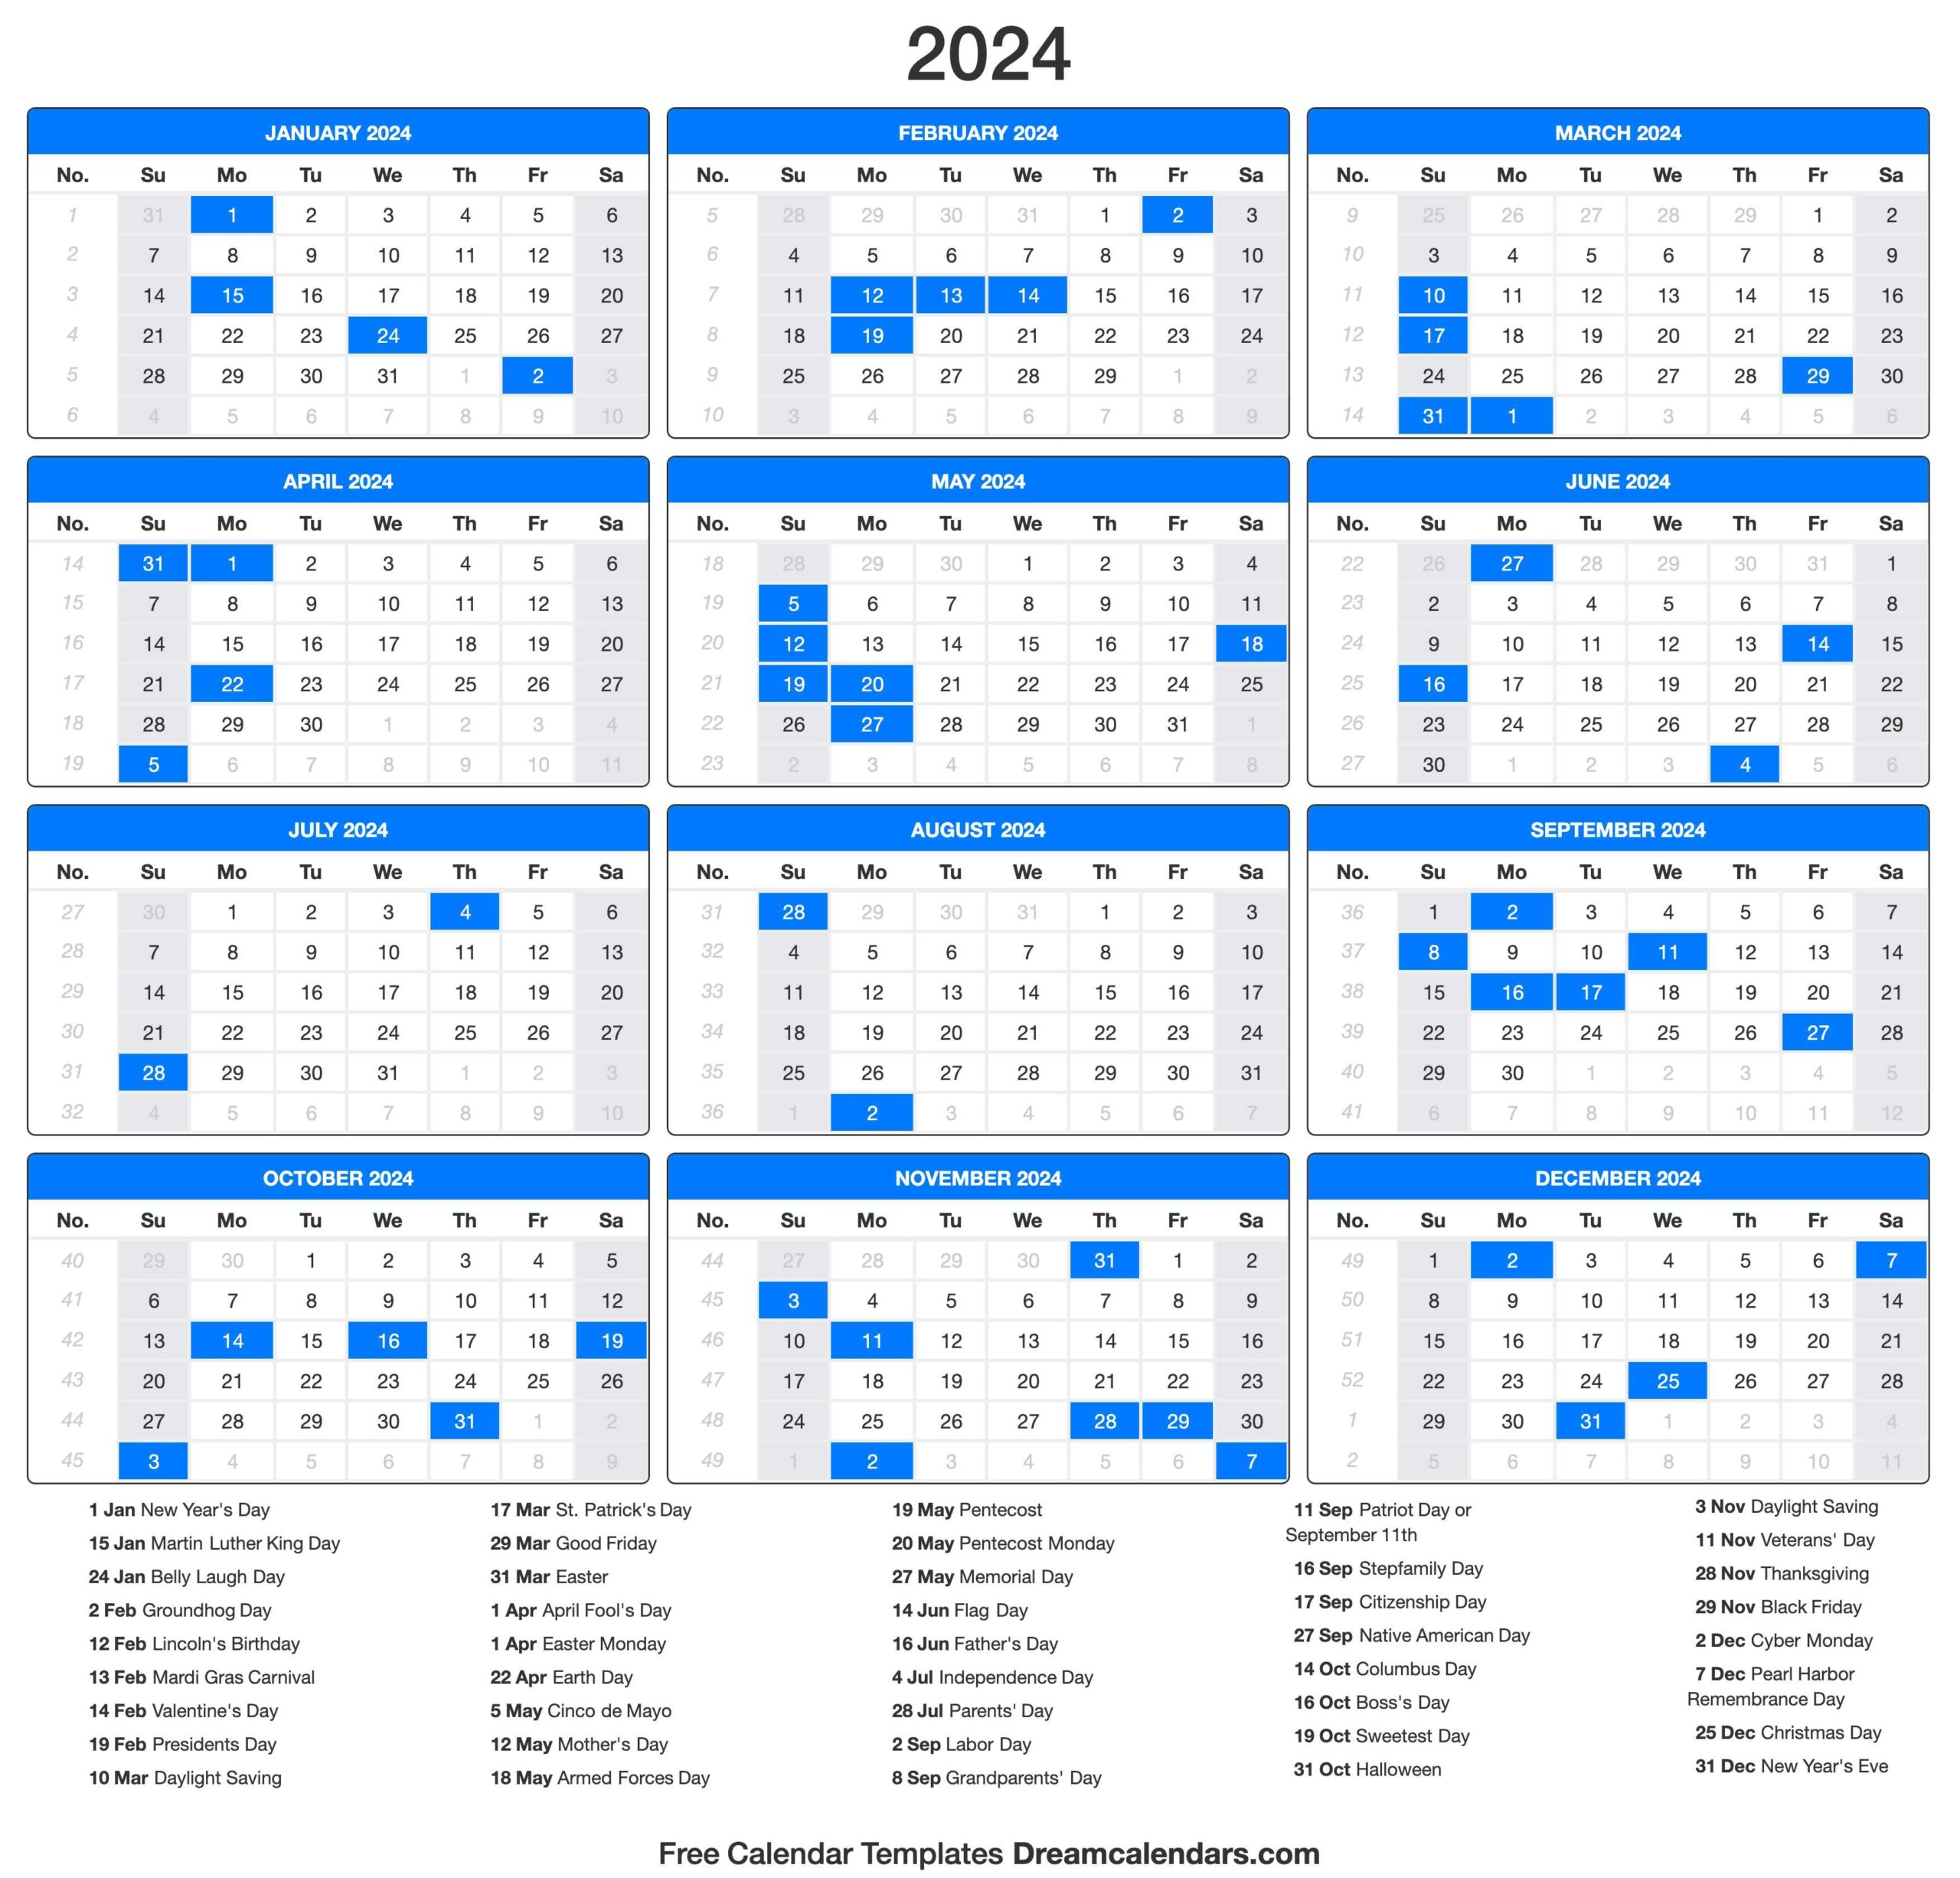 2024 Calendar - Free Printable 2024 Travel Expense Calendar